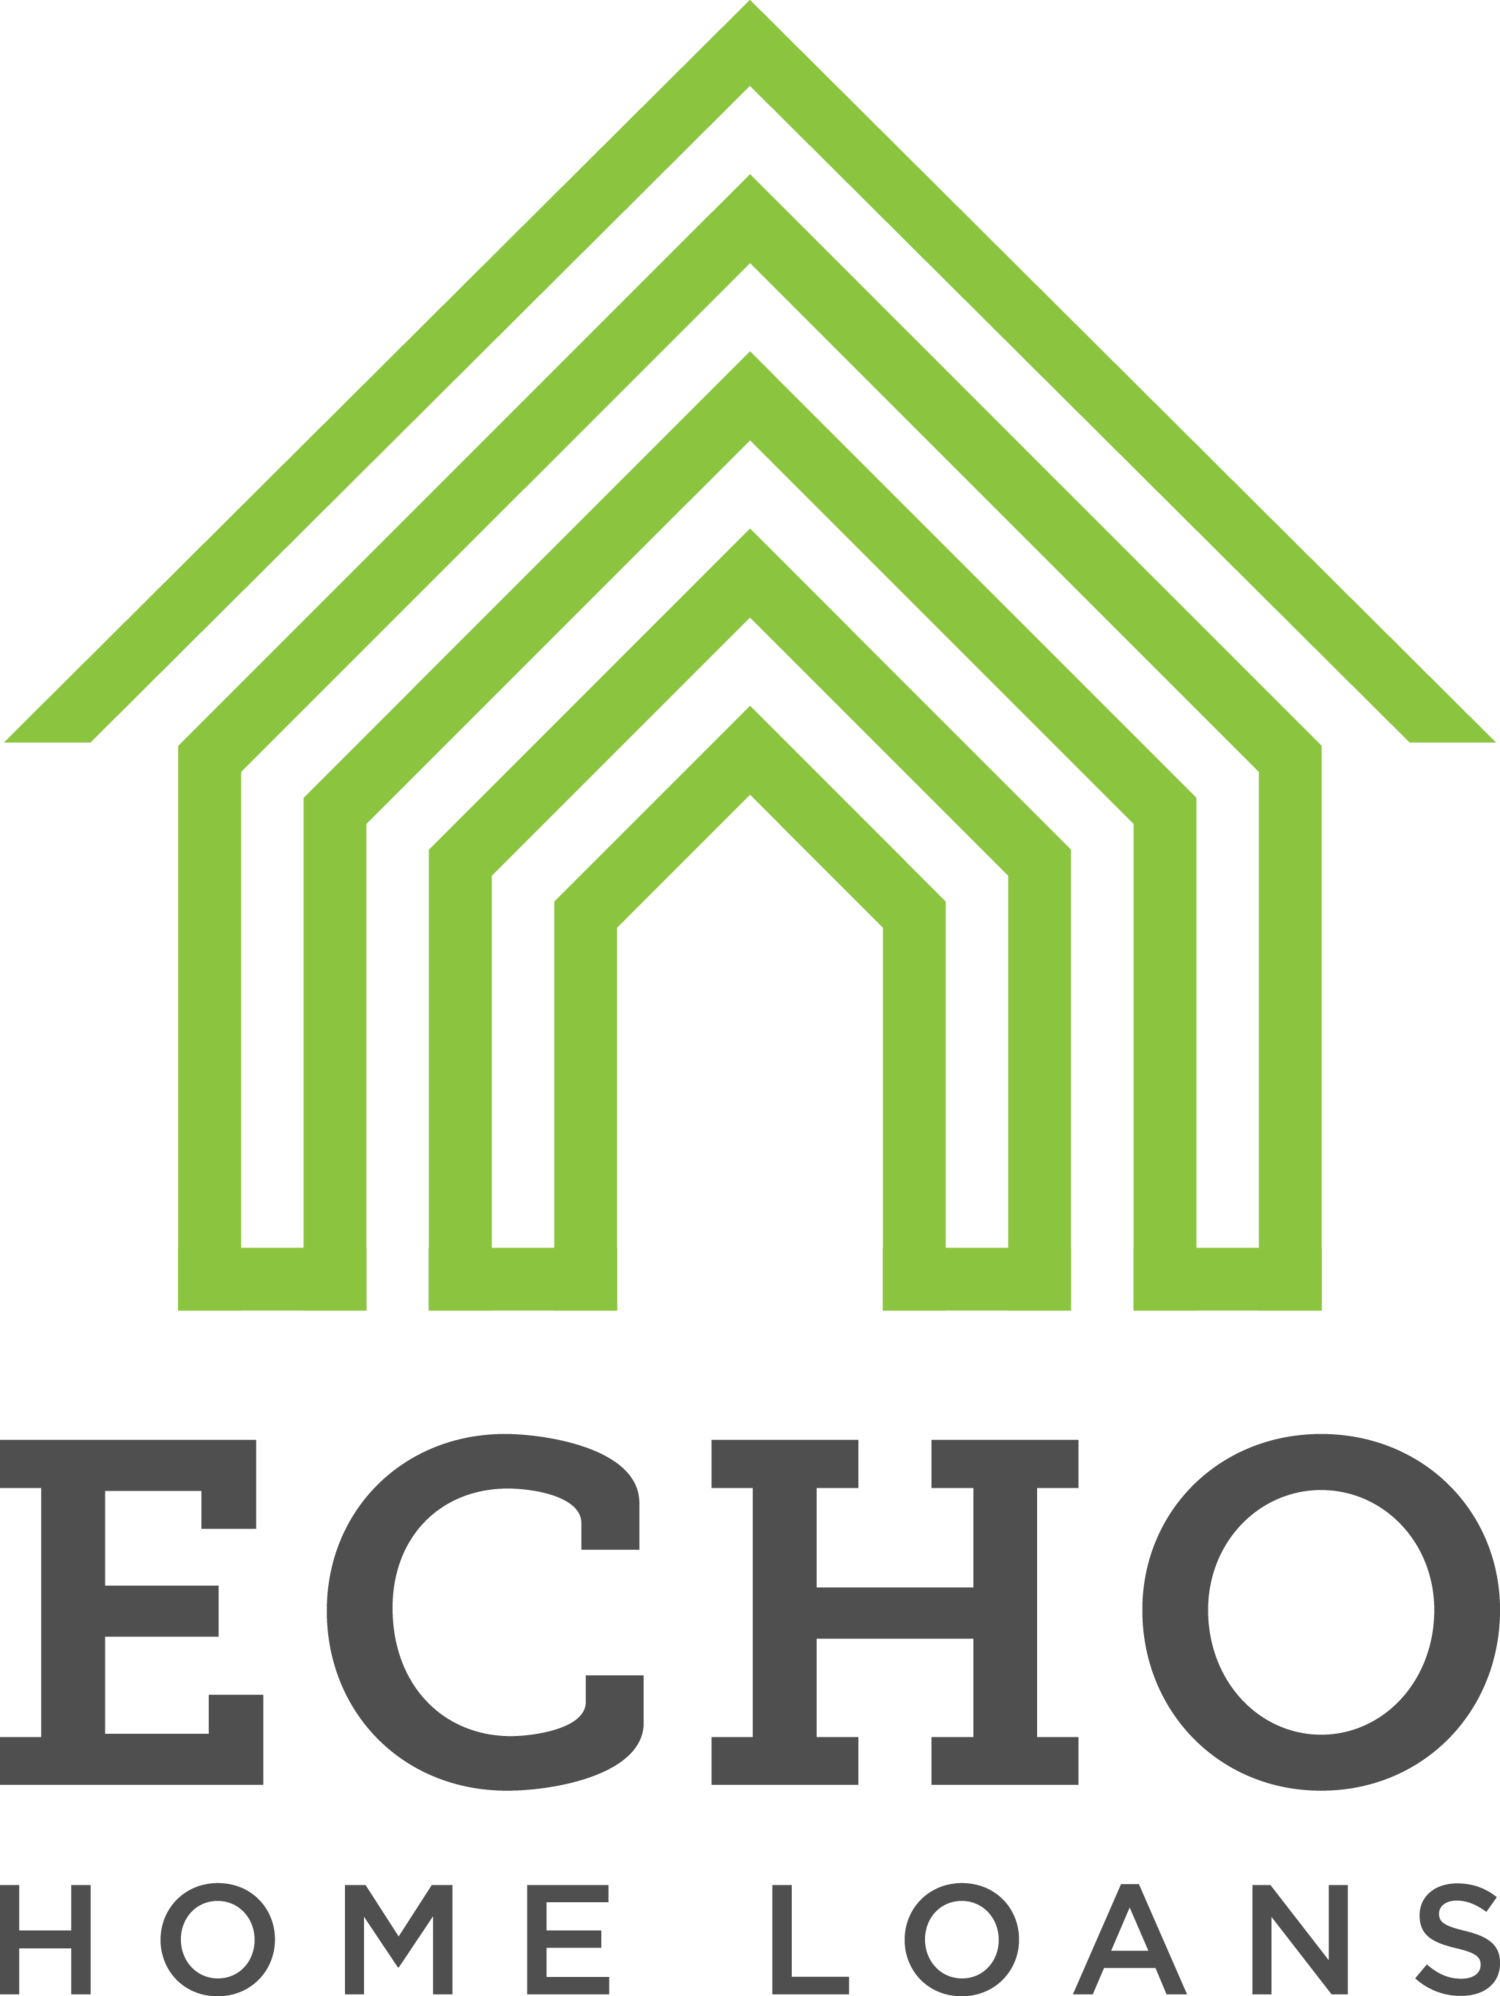 Echo Home Loans